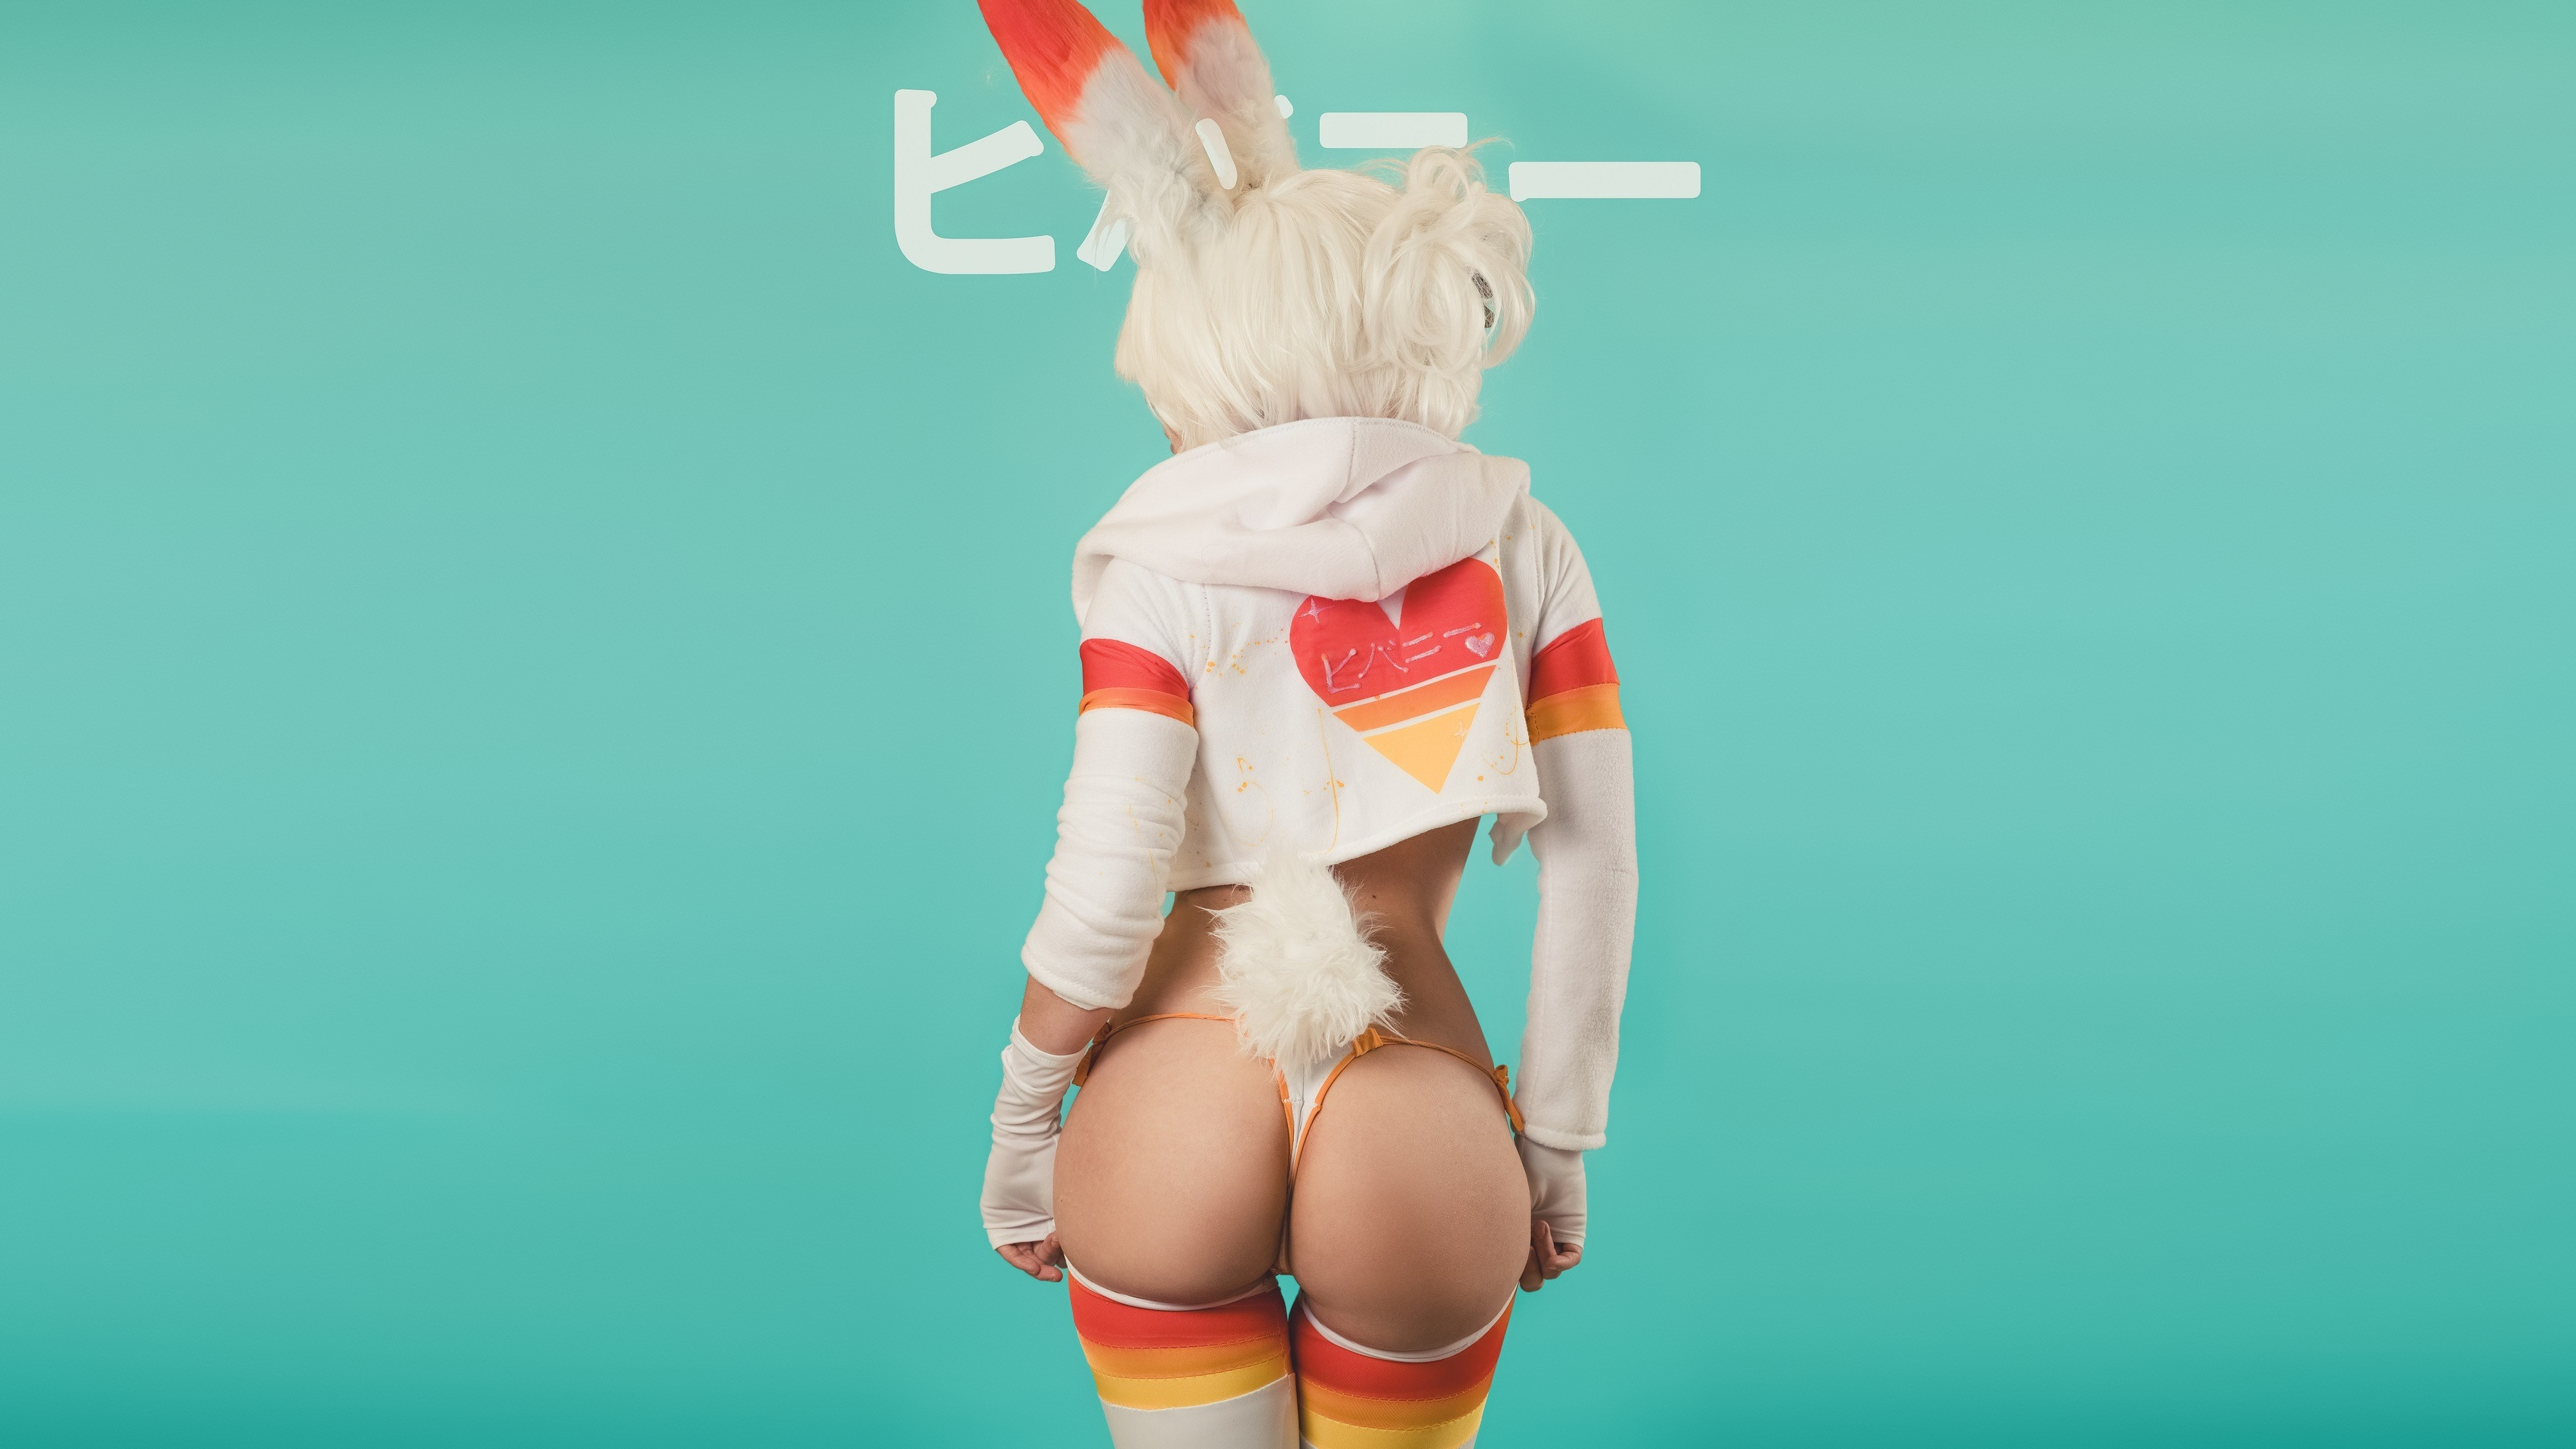 People 3412x1919 women model blonde cosplay tail ass Jessica Nigri bunny ears bunny girl the gap underwear panties thigh-highs turquoise Scorbunny (pokemon) Pokémon